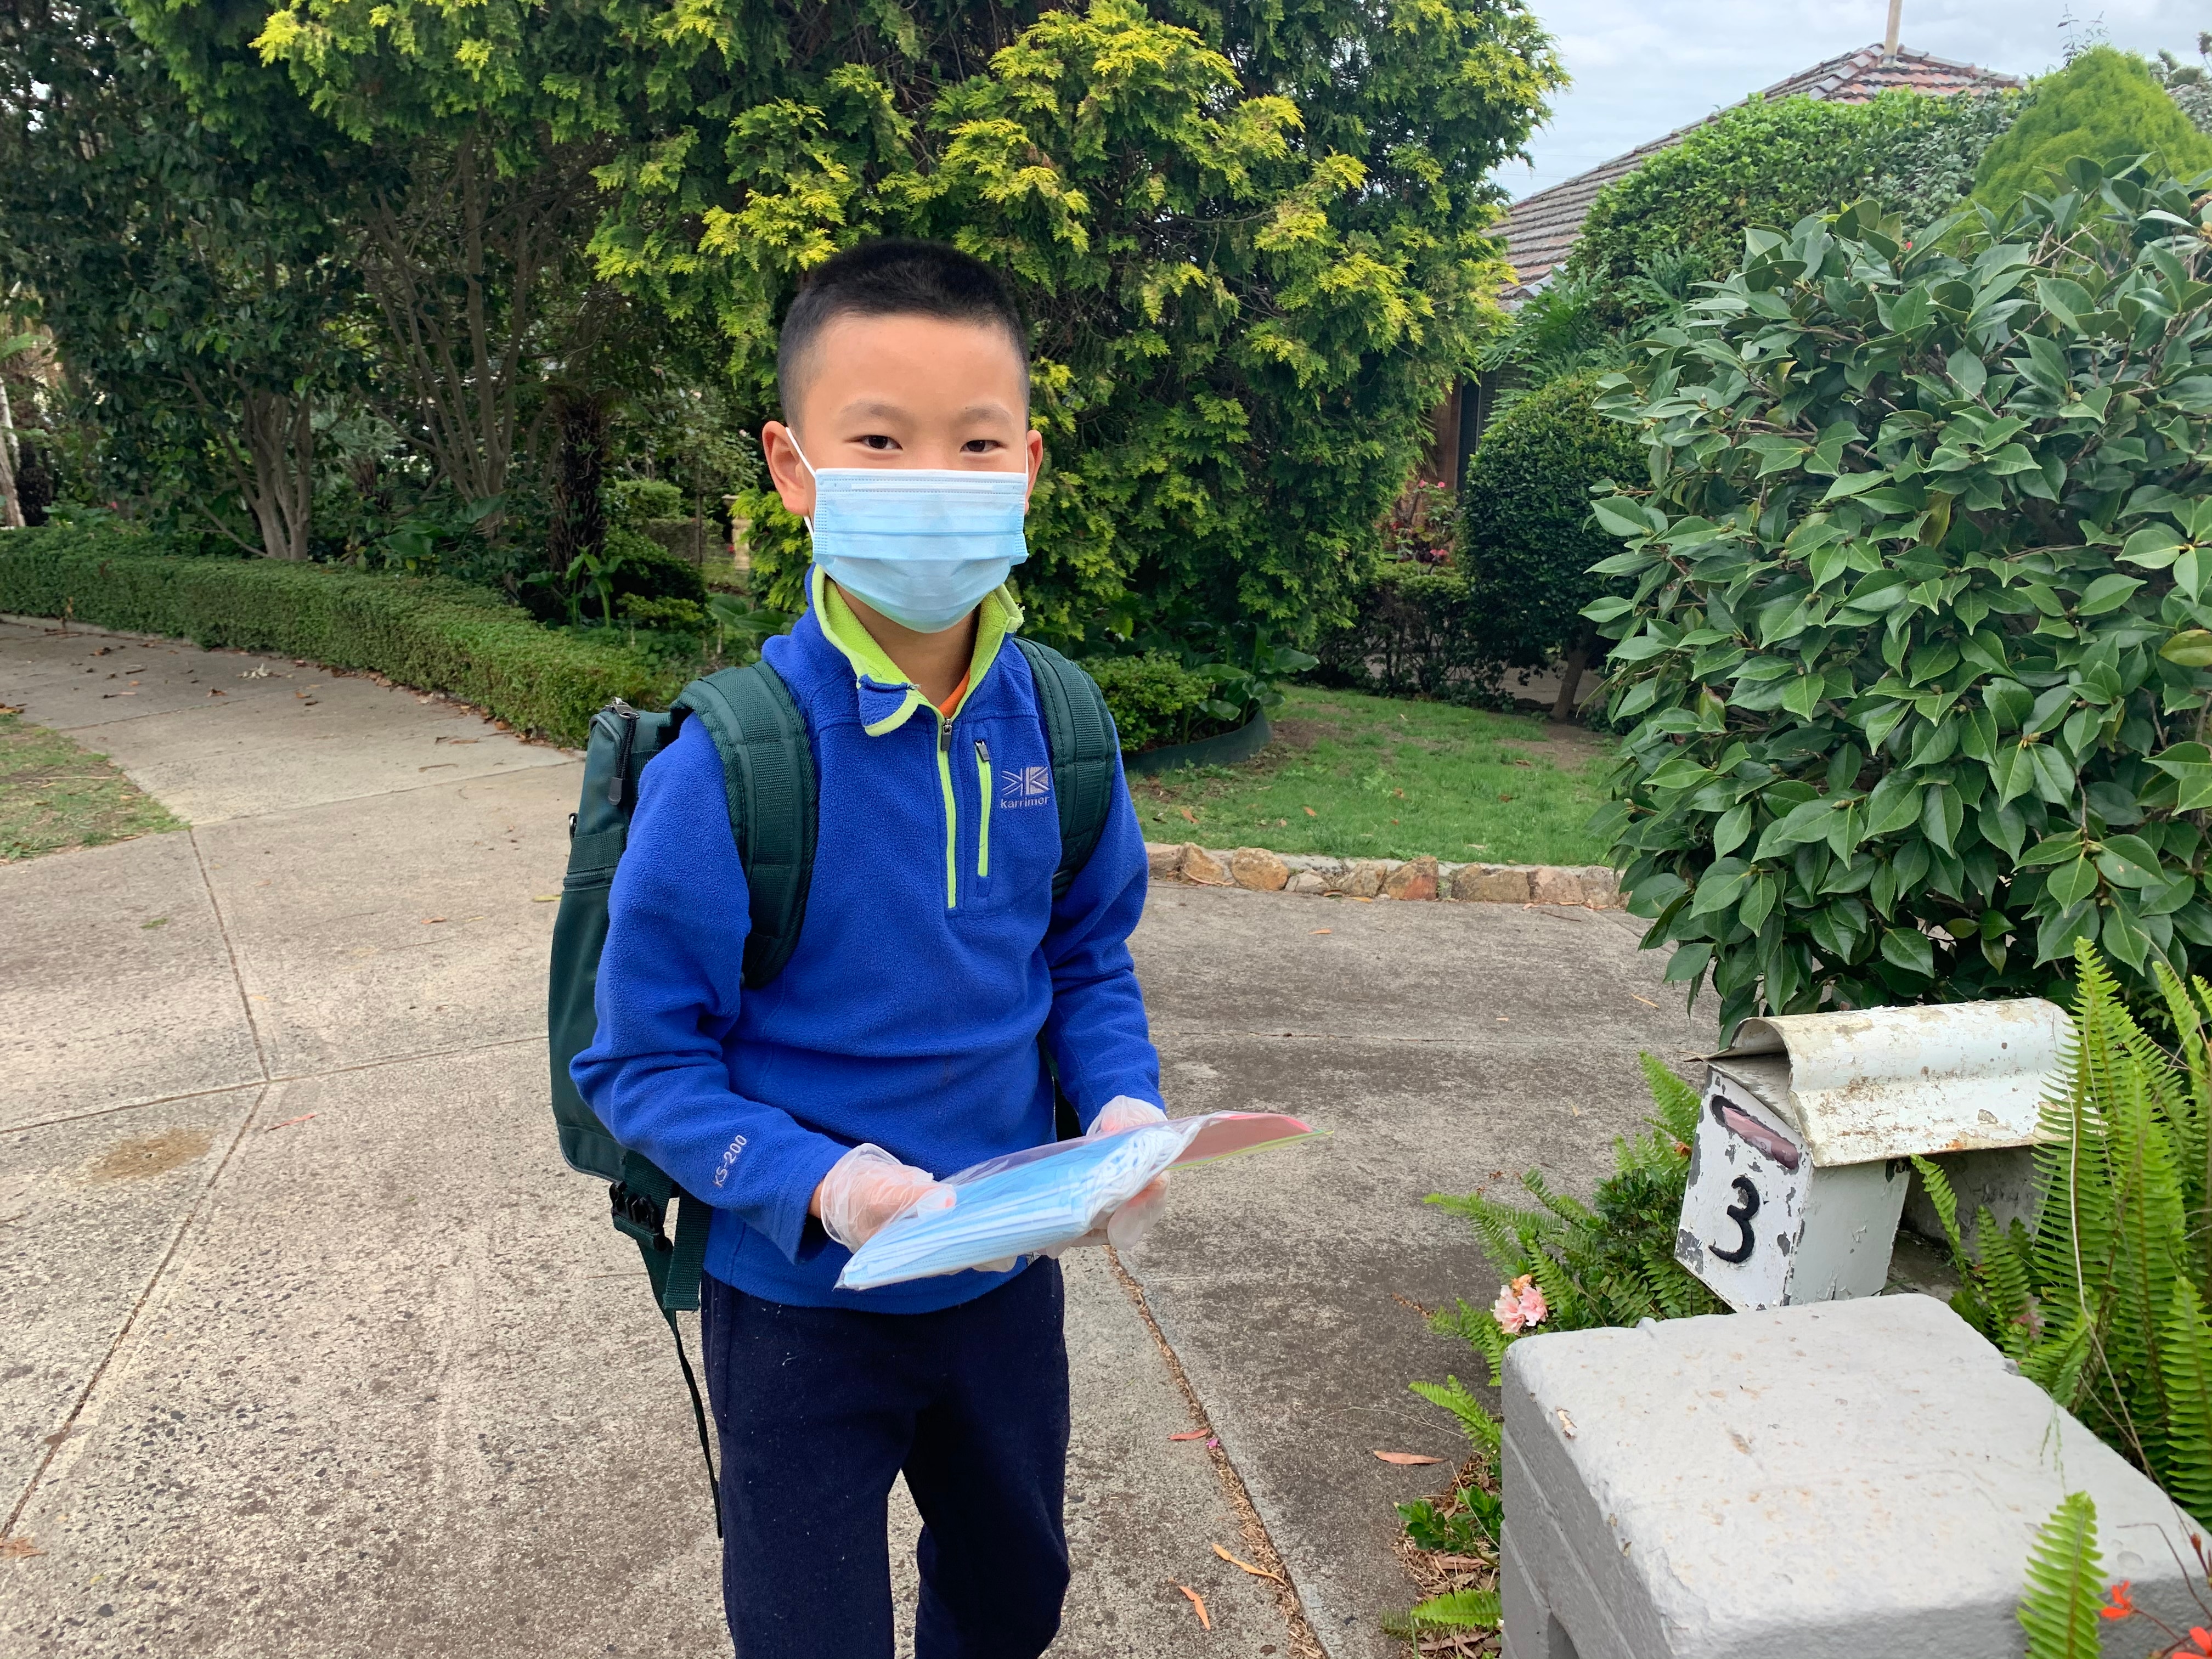 Jack Jiaji Lin on the way of distributing masks